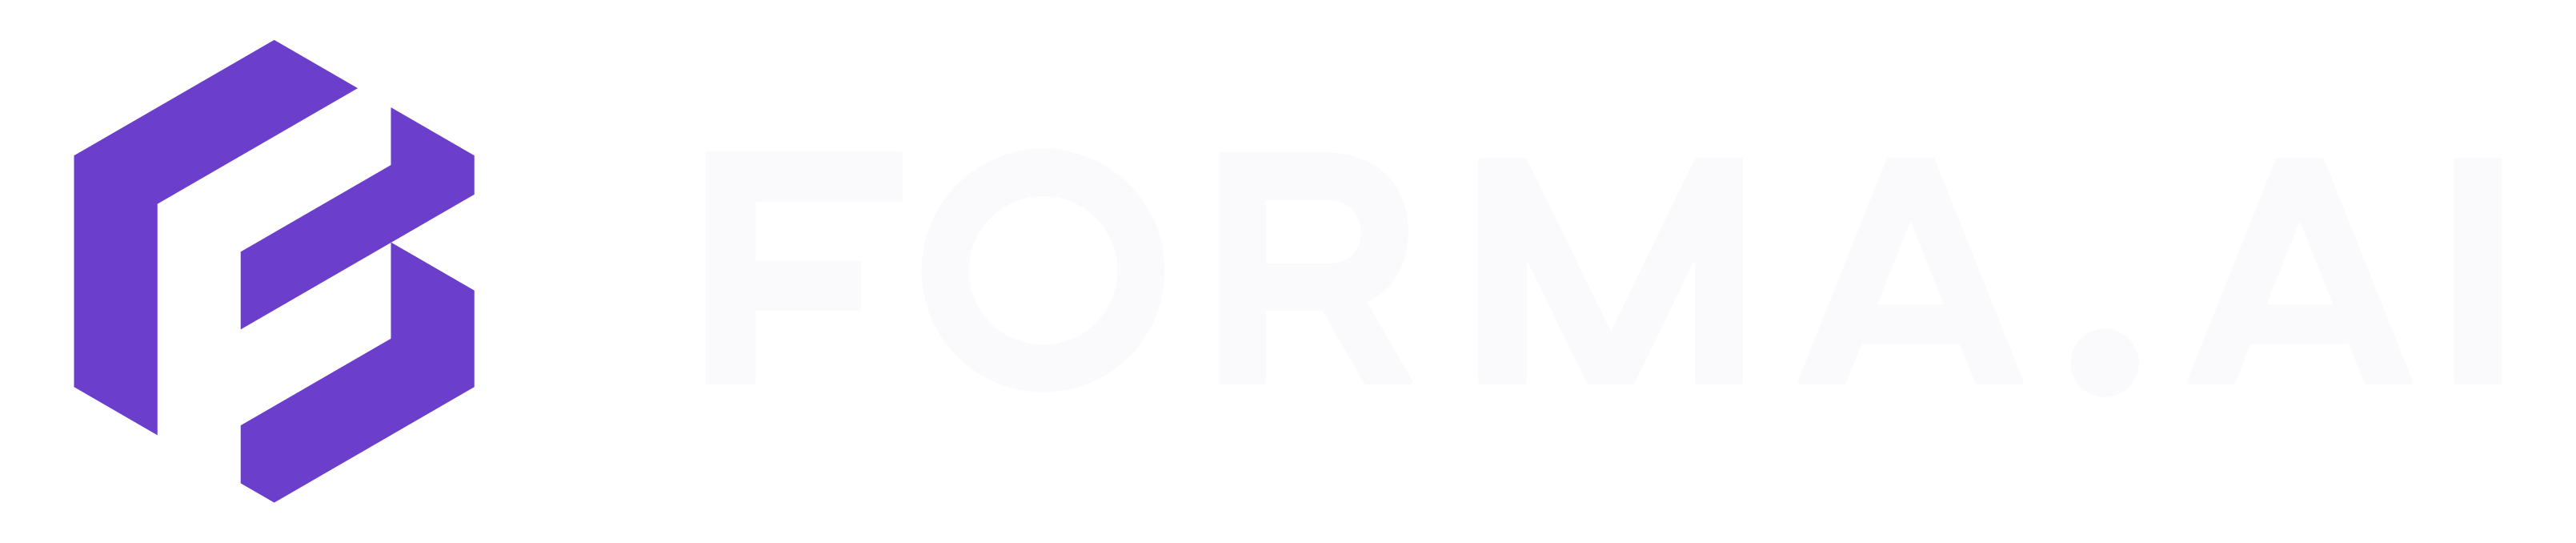 Forma-Logomark-LIGHT_RGB